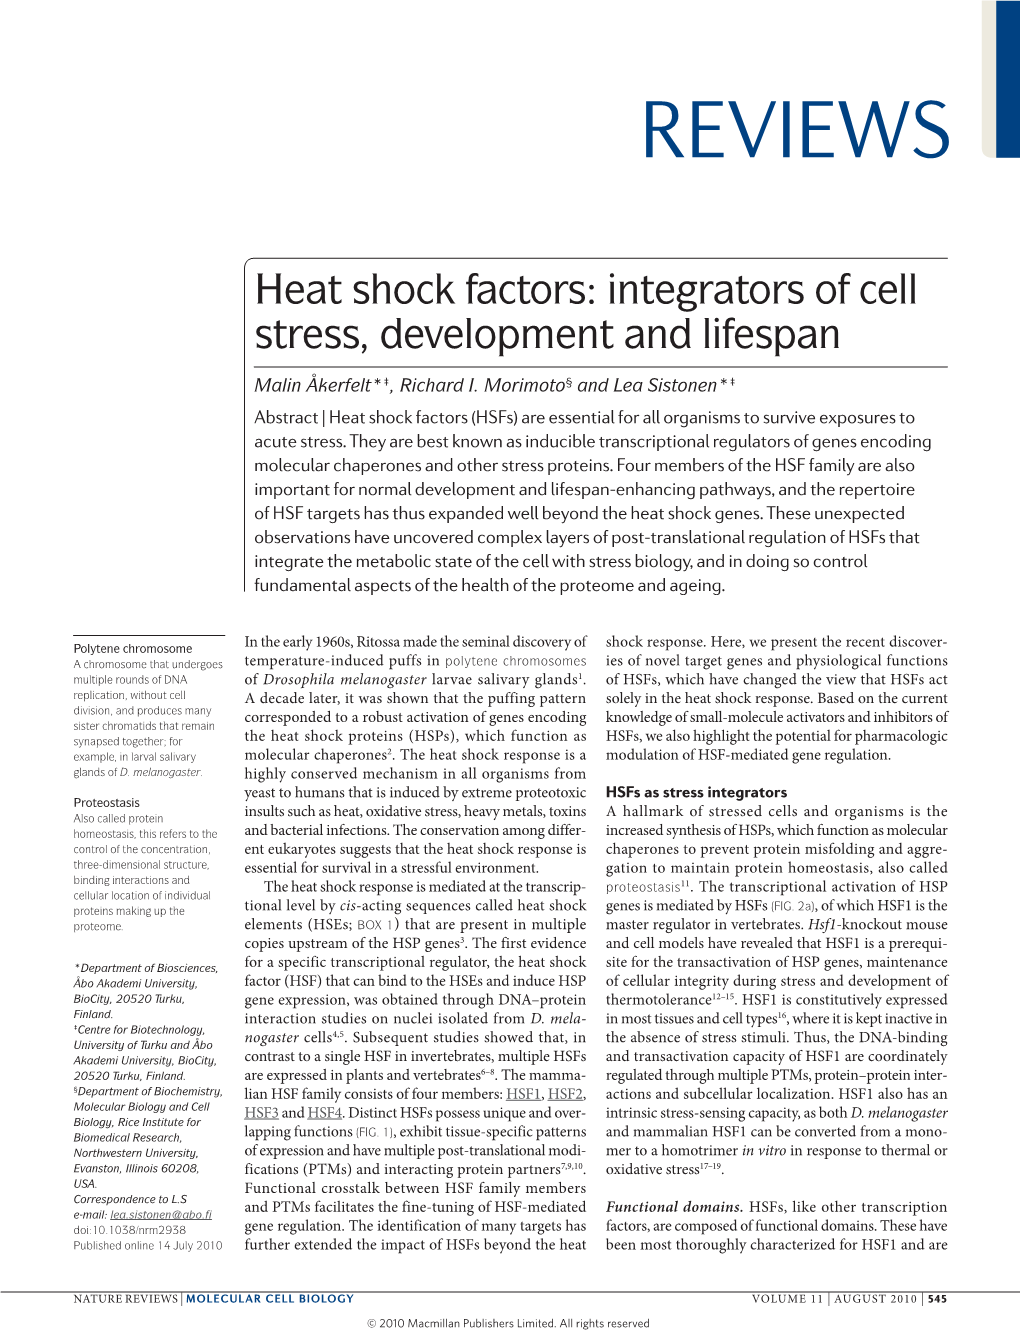 Heat Shock Factors: Integrators of Cell Stress, Development and Lifespan